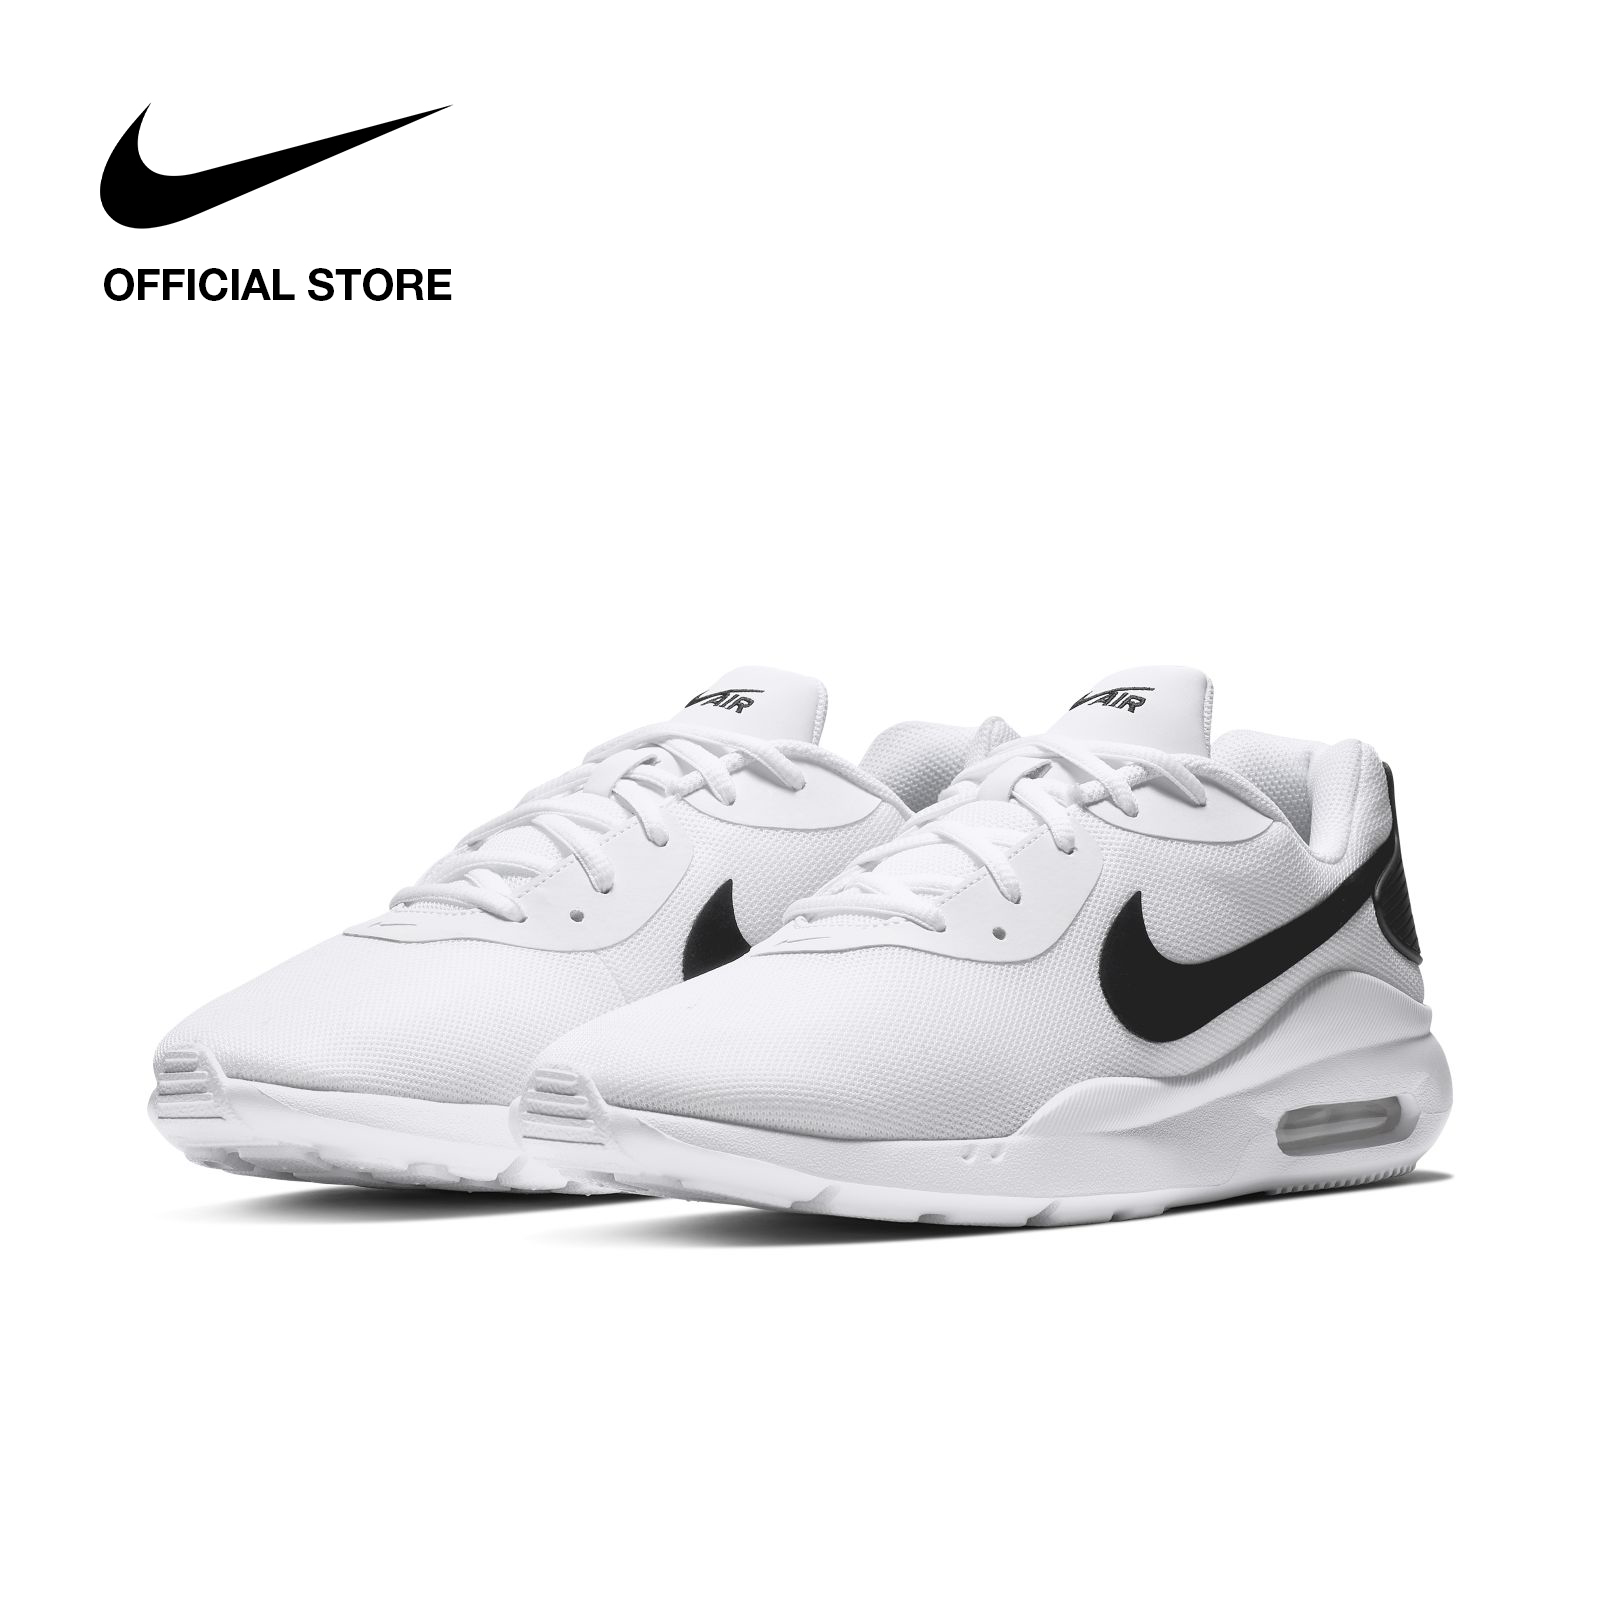 Confront Western calm down Nike Men's Air Max Oketo Shoes White | Lazada PH